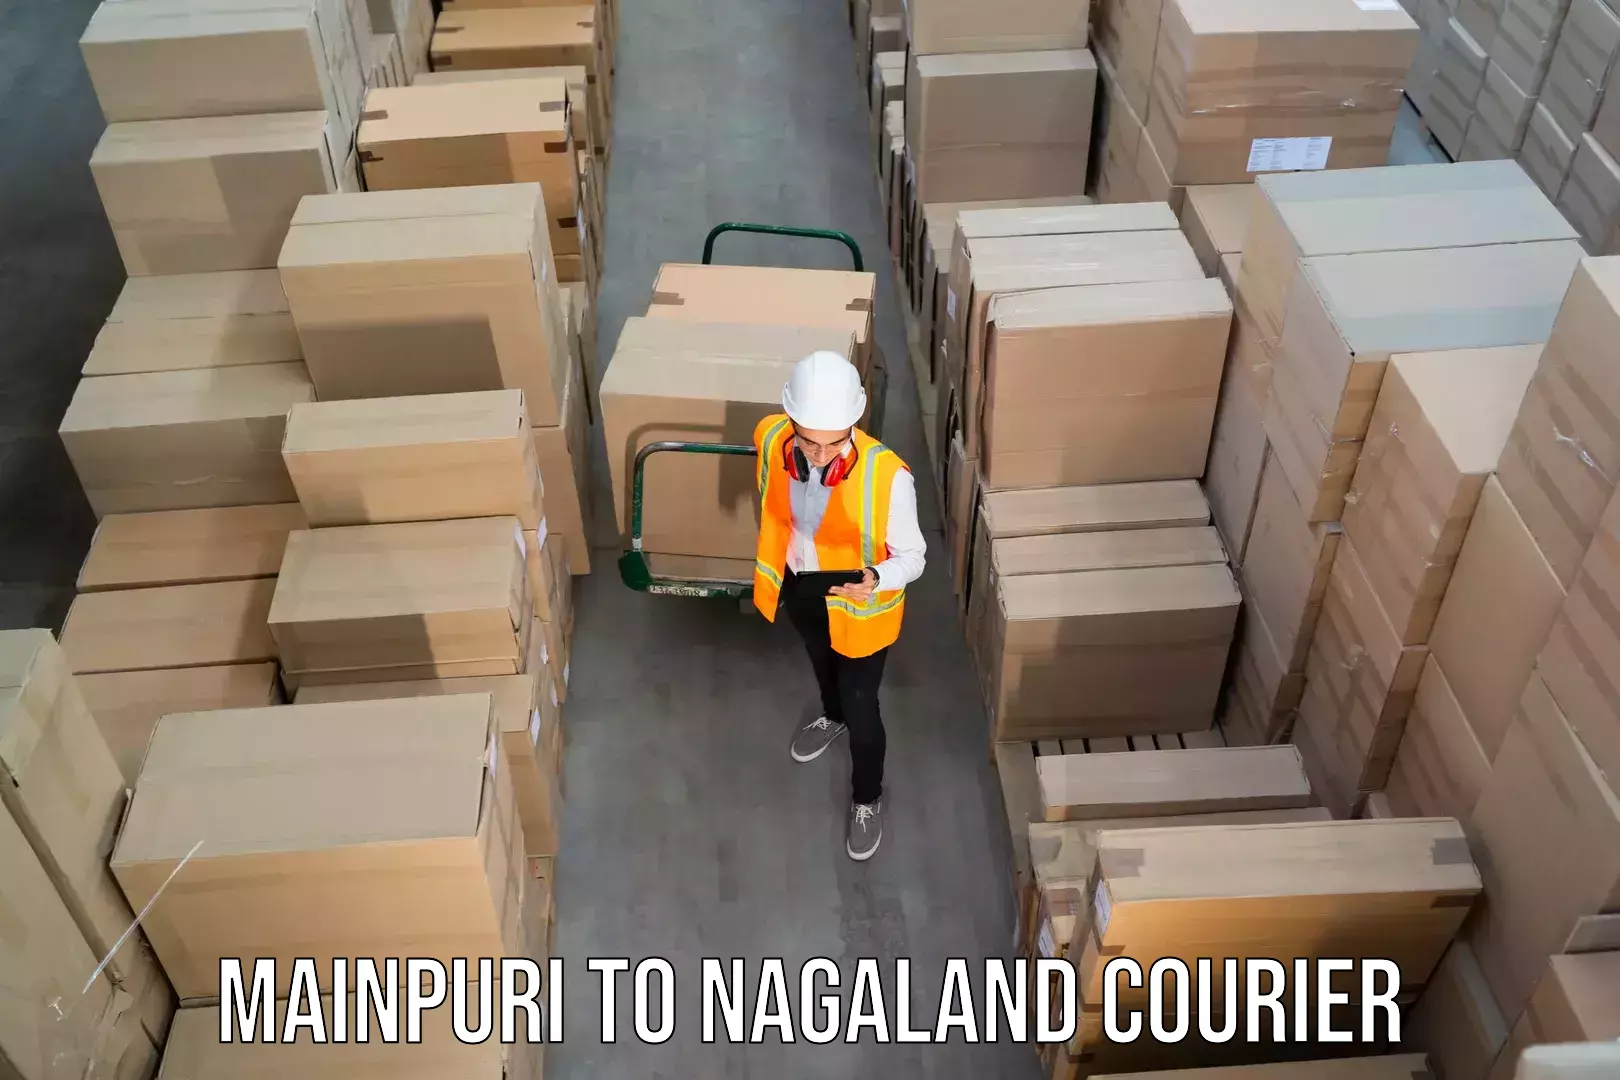 User-friendly courier app Mainpuri to Nagaland